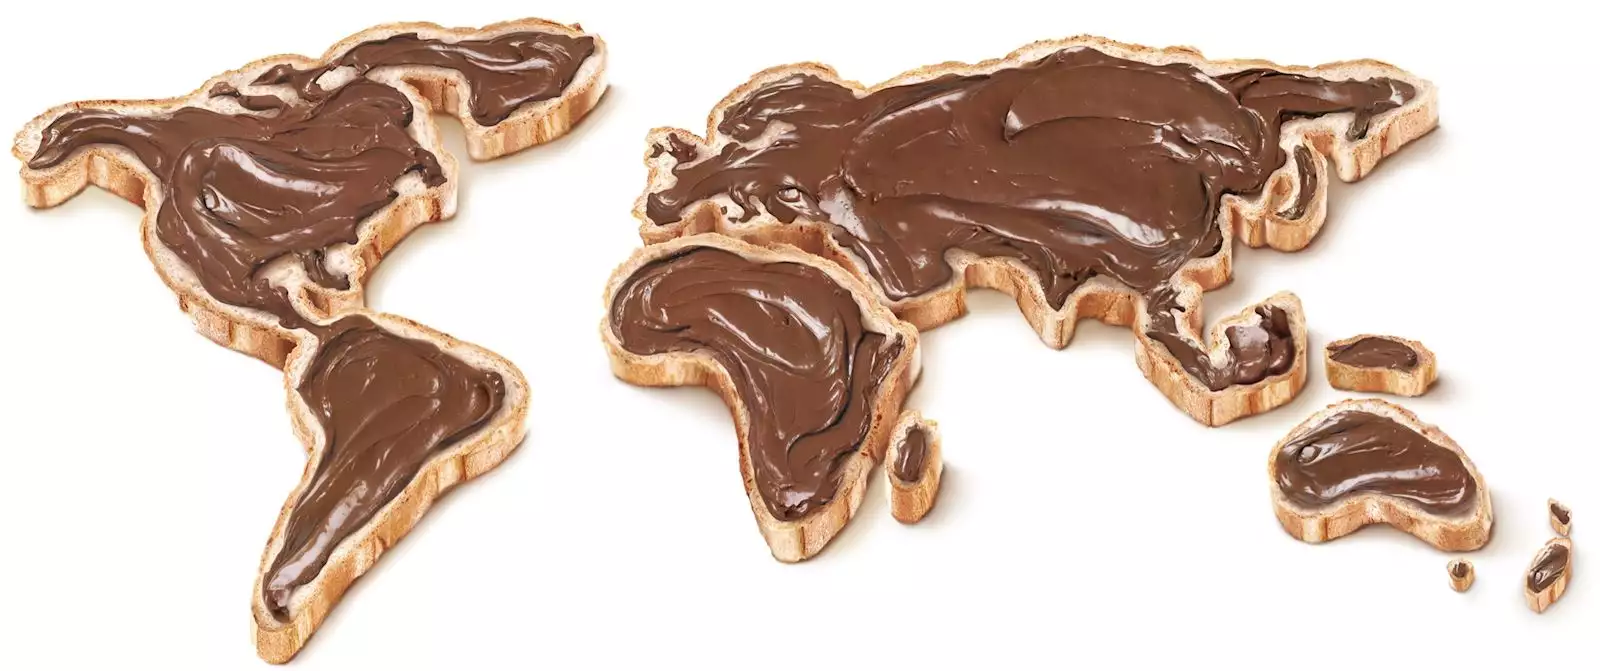 World Nutella Day Map